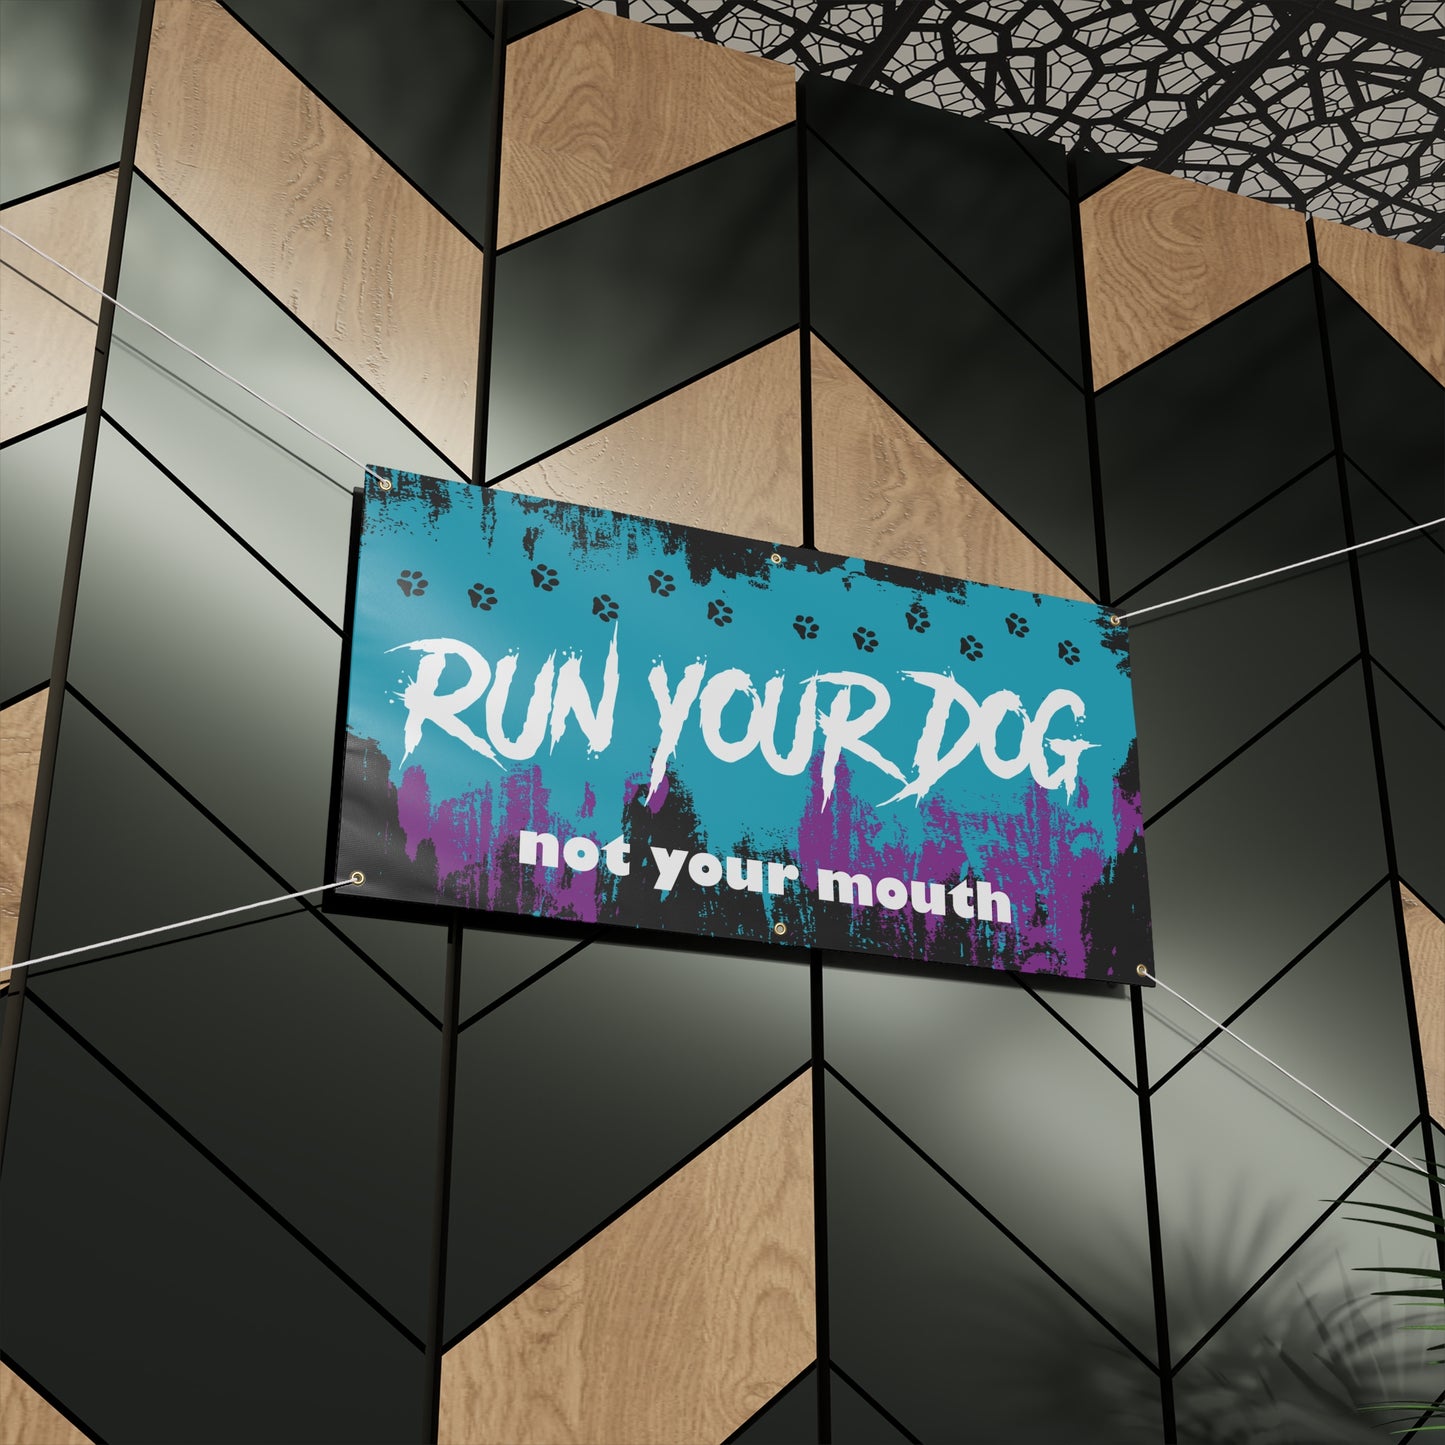 RUN YOUR DOG Matte Banner